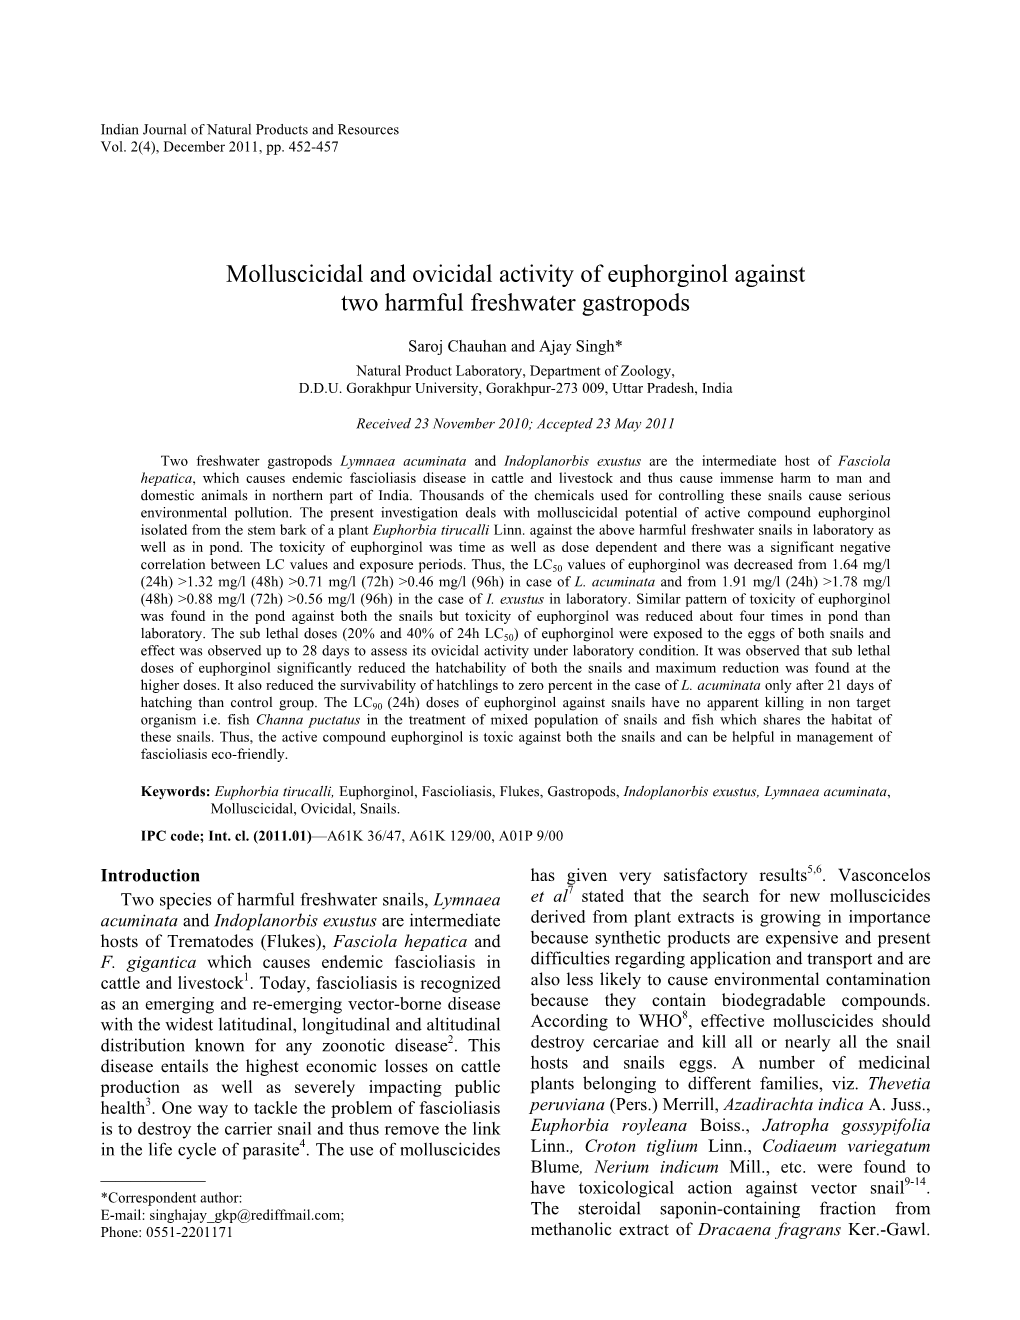 Molluscicidal and Ovicidal Activity of Euphorginol Against Two Harmful Freshwater Gastropods